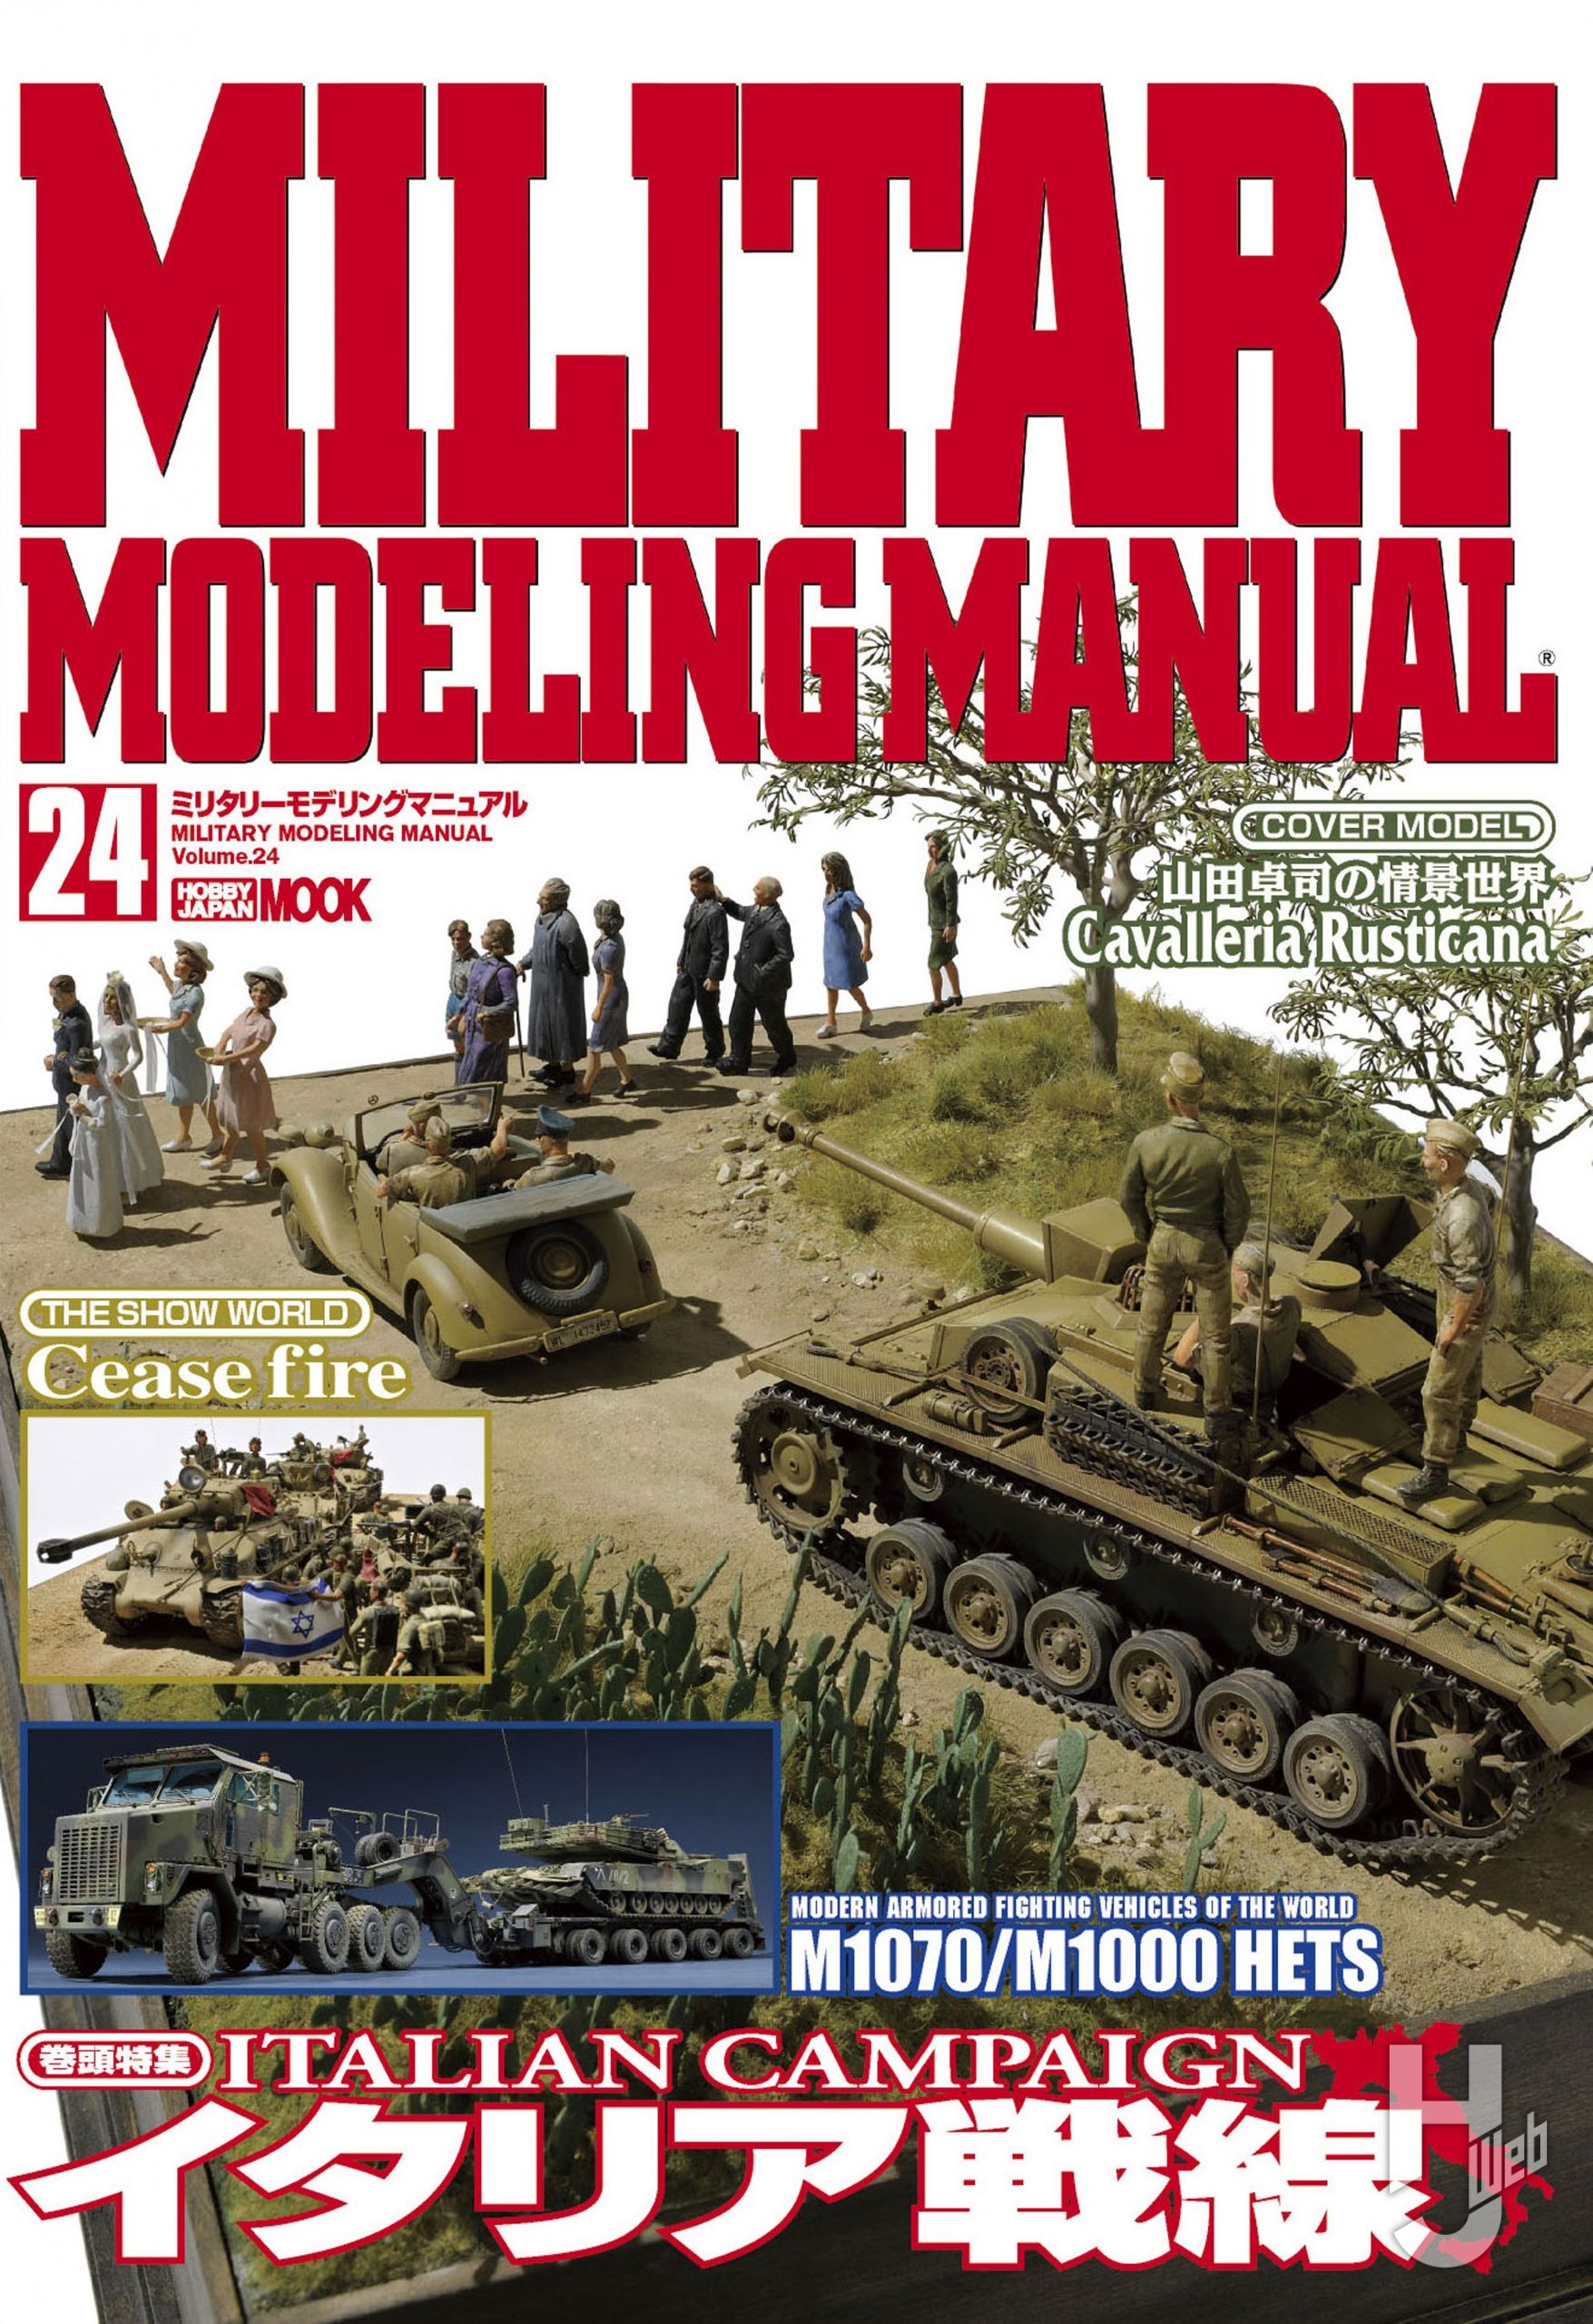 MILITARY MODELING MANUAL vol.24の表紙画像